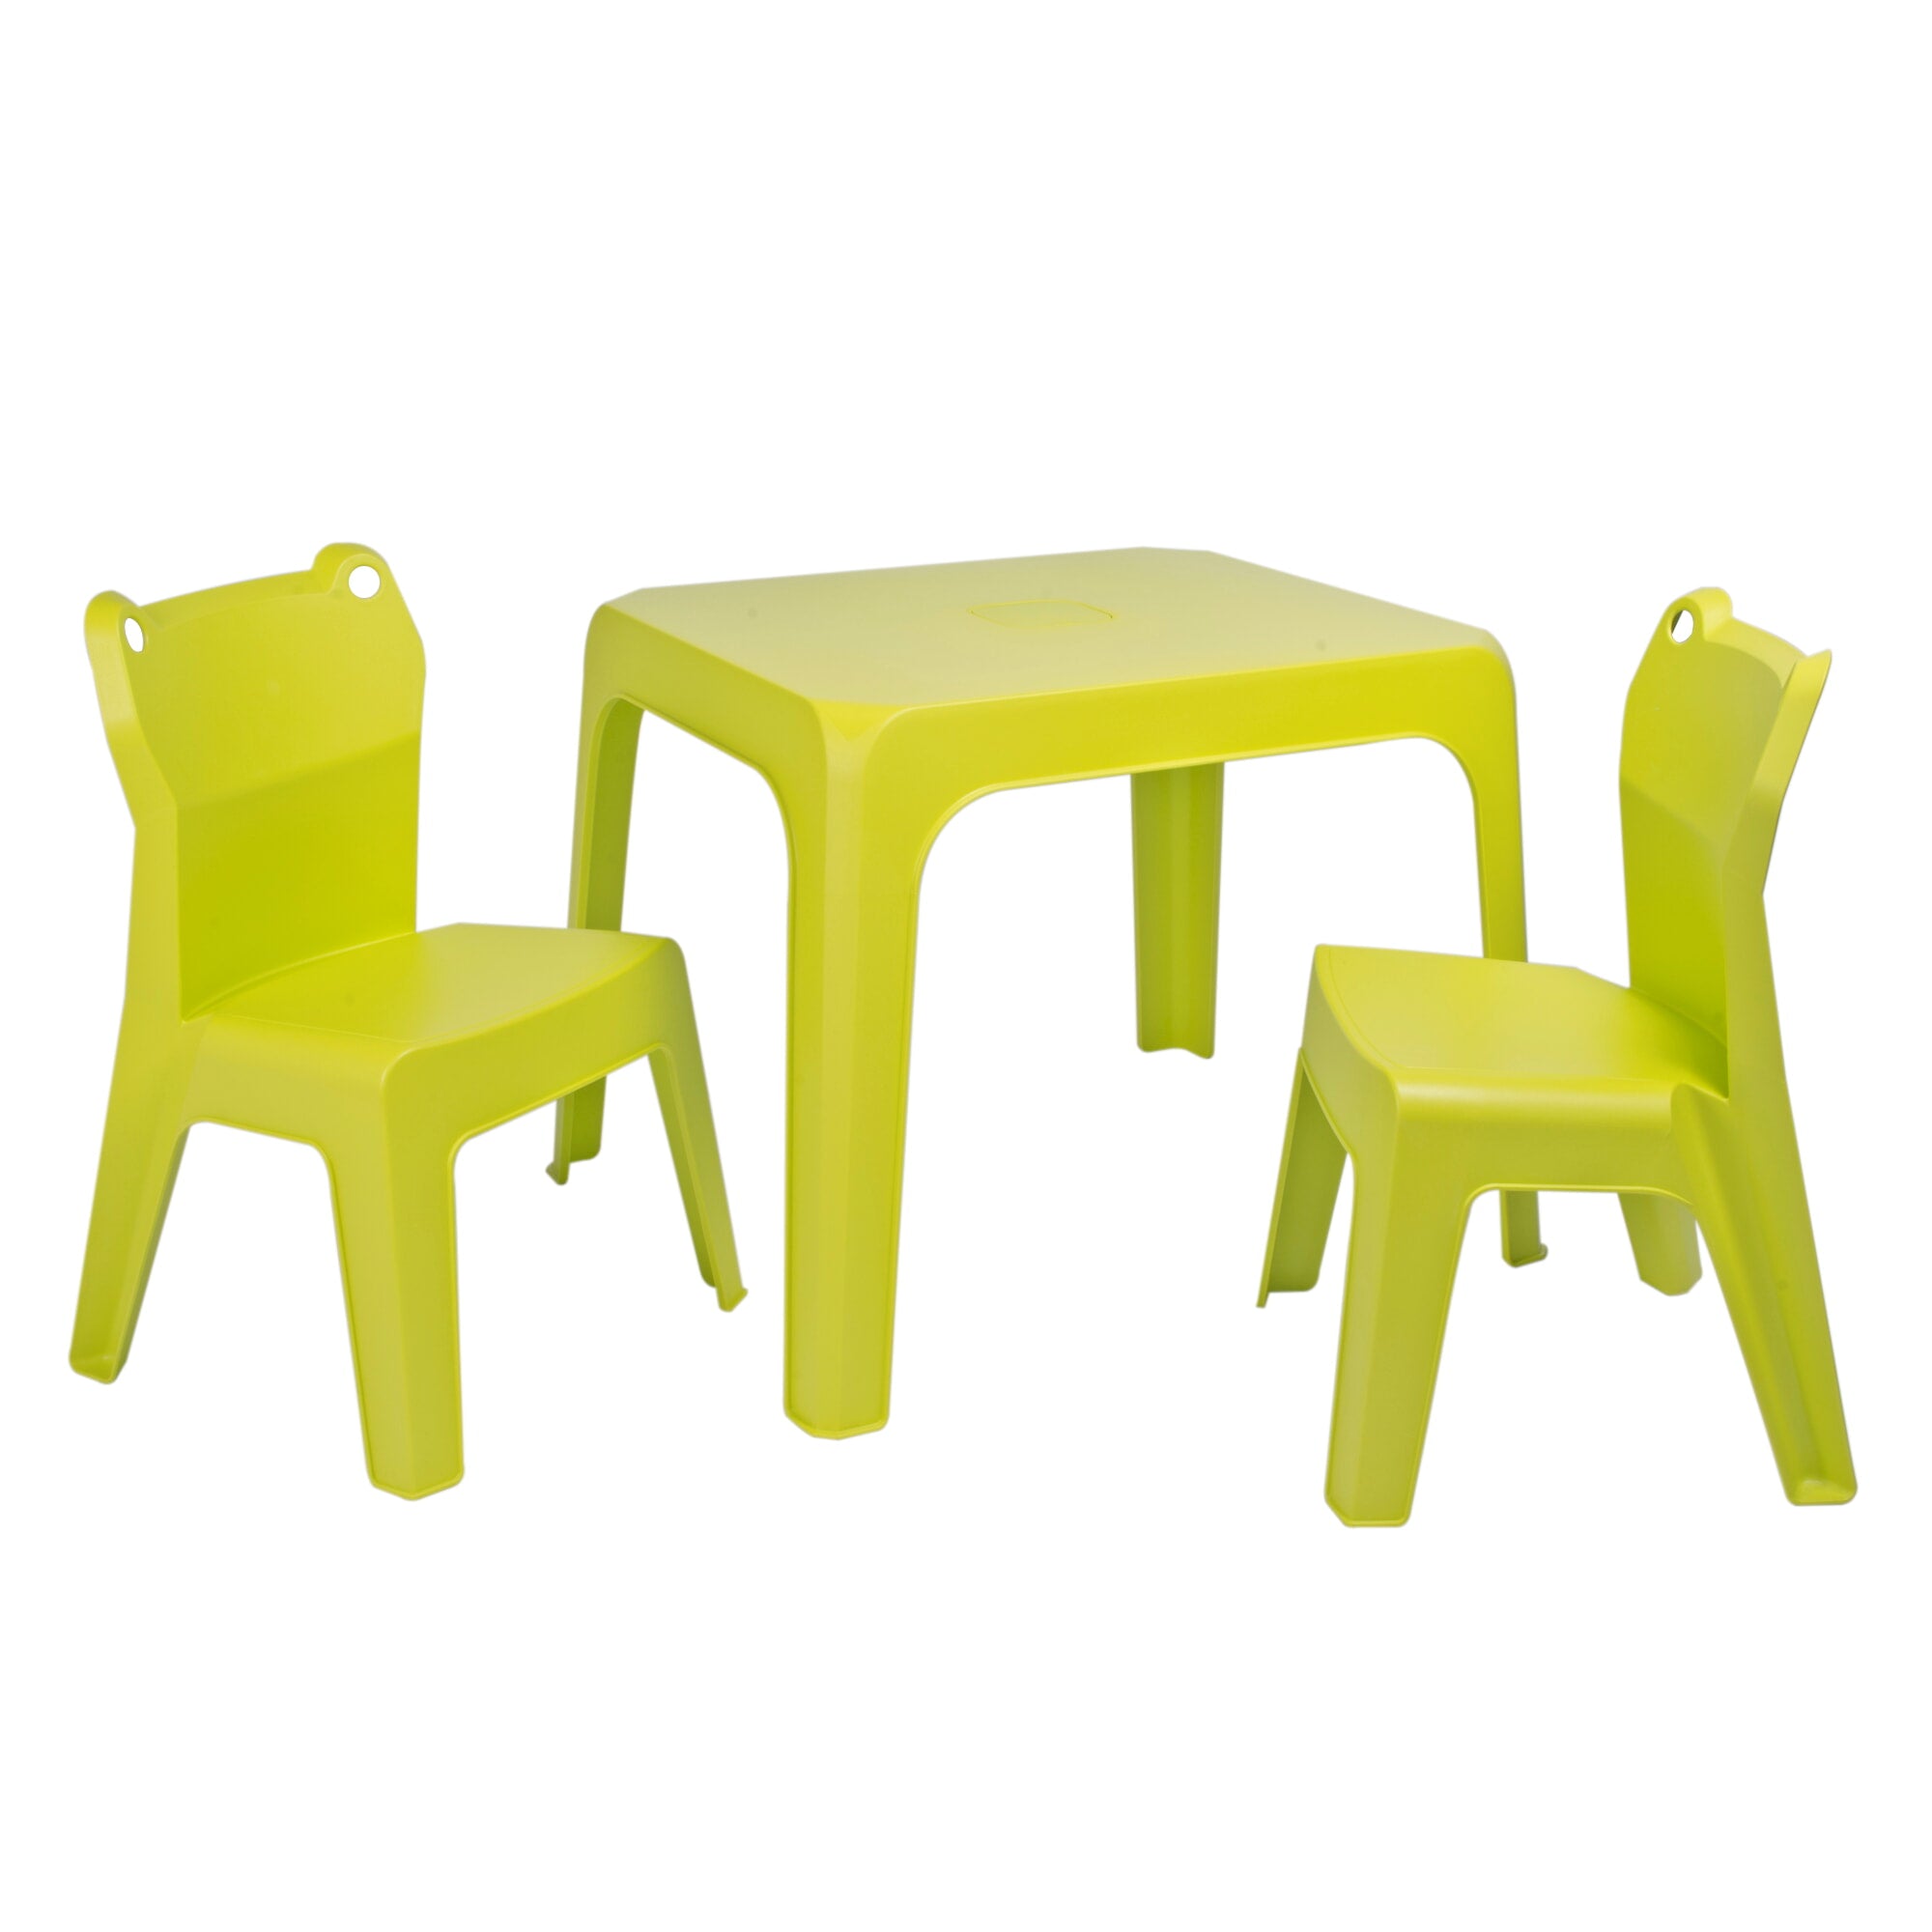 Garbar kikker kinderstoel en tafel set 2+1 groen lime